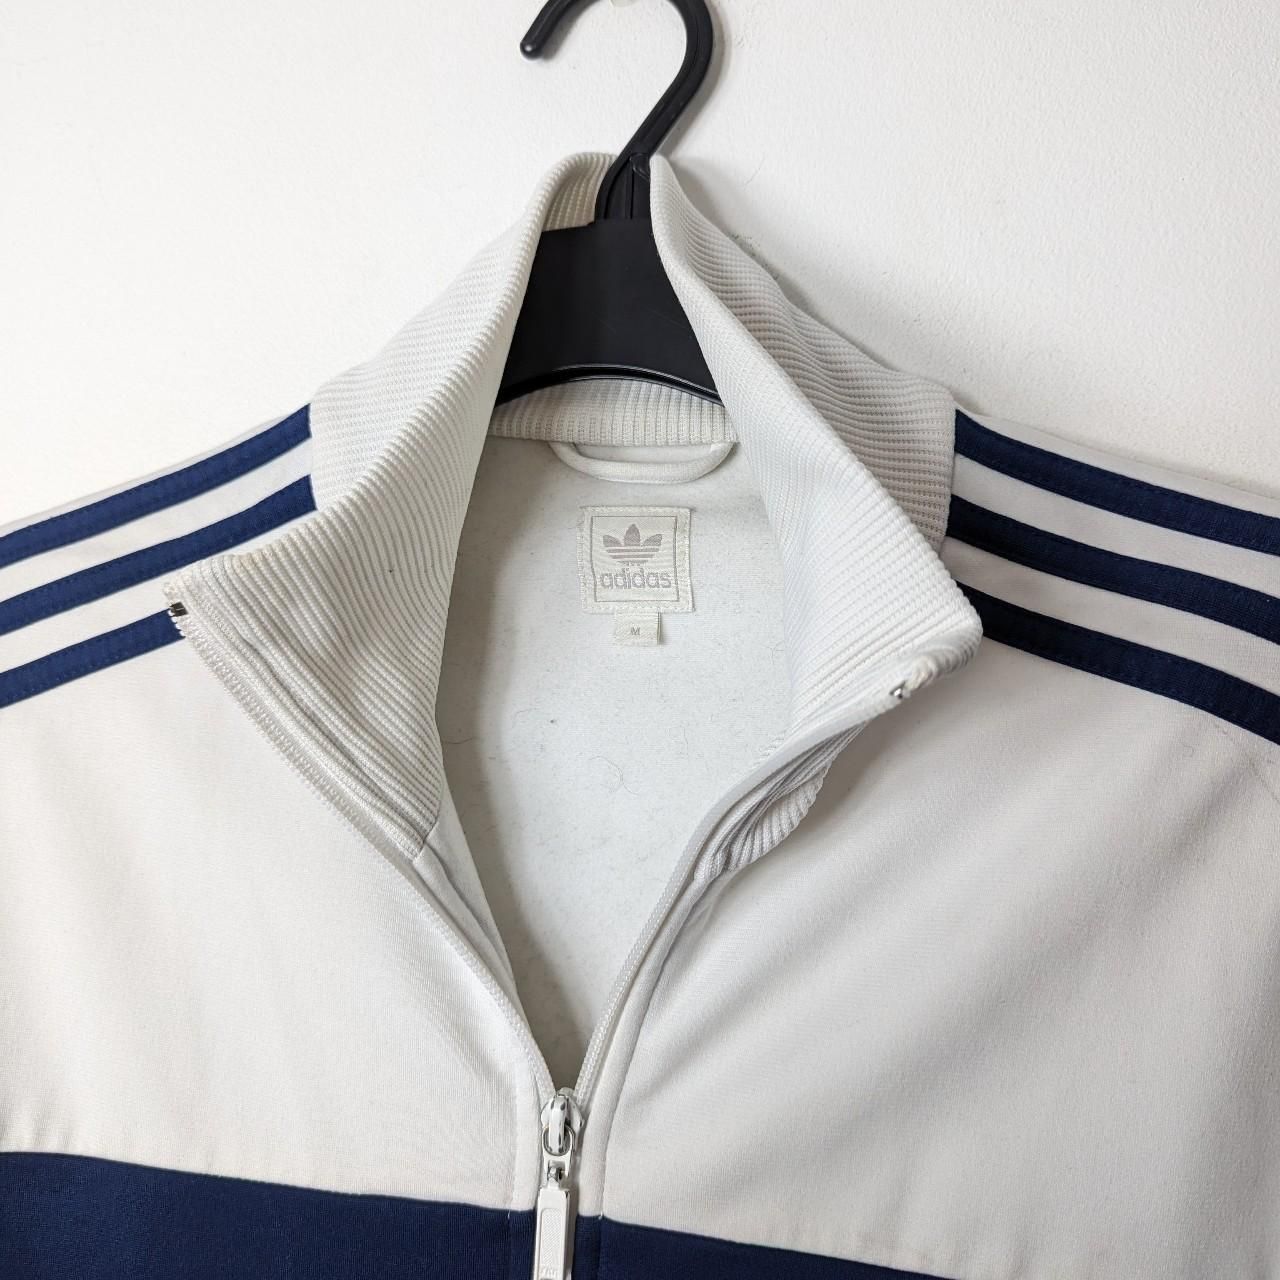 Adidas Vintage Adidas y2k Track top Track suit Sweatshirt Size US M / EU 48-50 / 2 - 5 Thumbnail